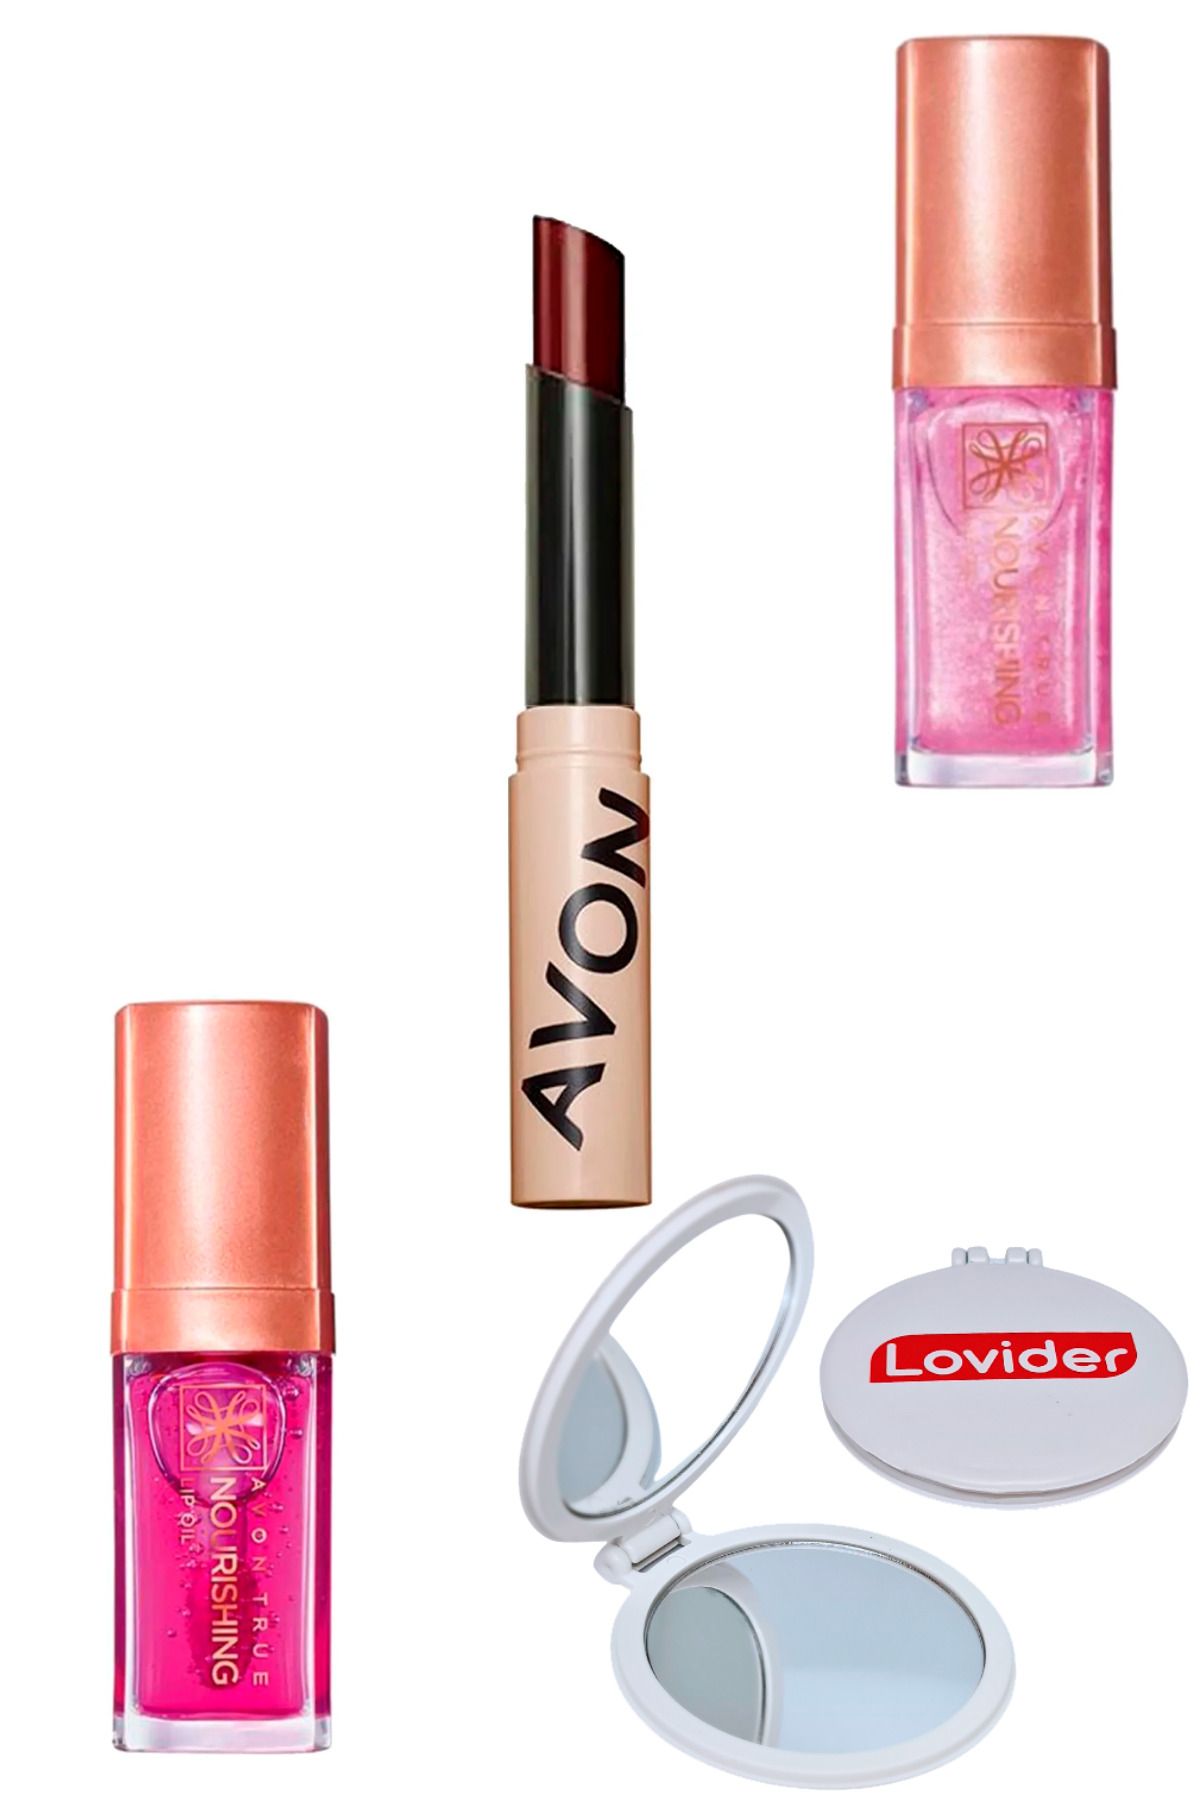 Avon Dudak Yağı Blossom + Tinted Plum + Dudak Yağı Shimmering Petal Paketi + Lovider Cep Aynası